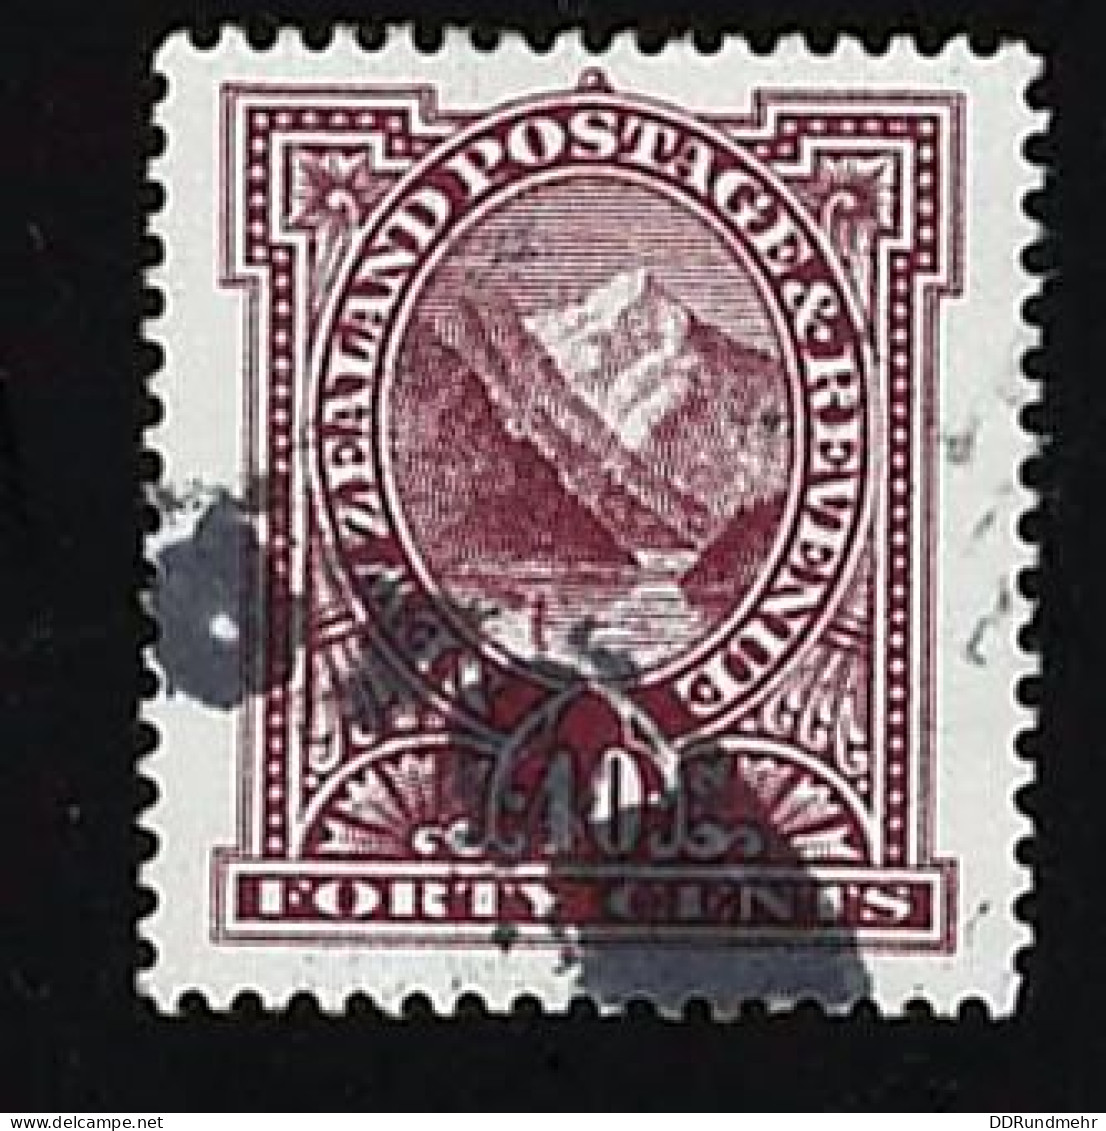 1998 Pembroke Peak Michel NZ 1679 Stamp Number NZ 1510 Yvert Et Tellier NZ 1608 Stanley Gibbons NZ 2160 - Used Stamps